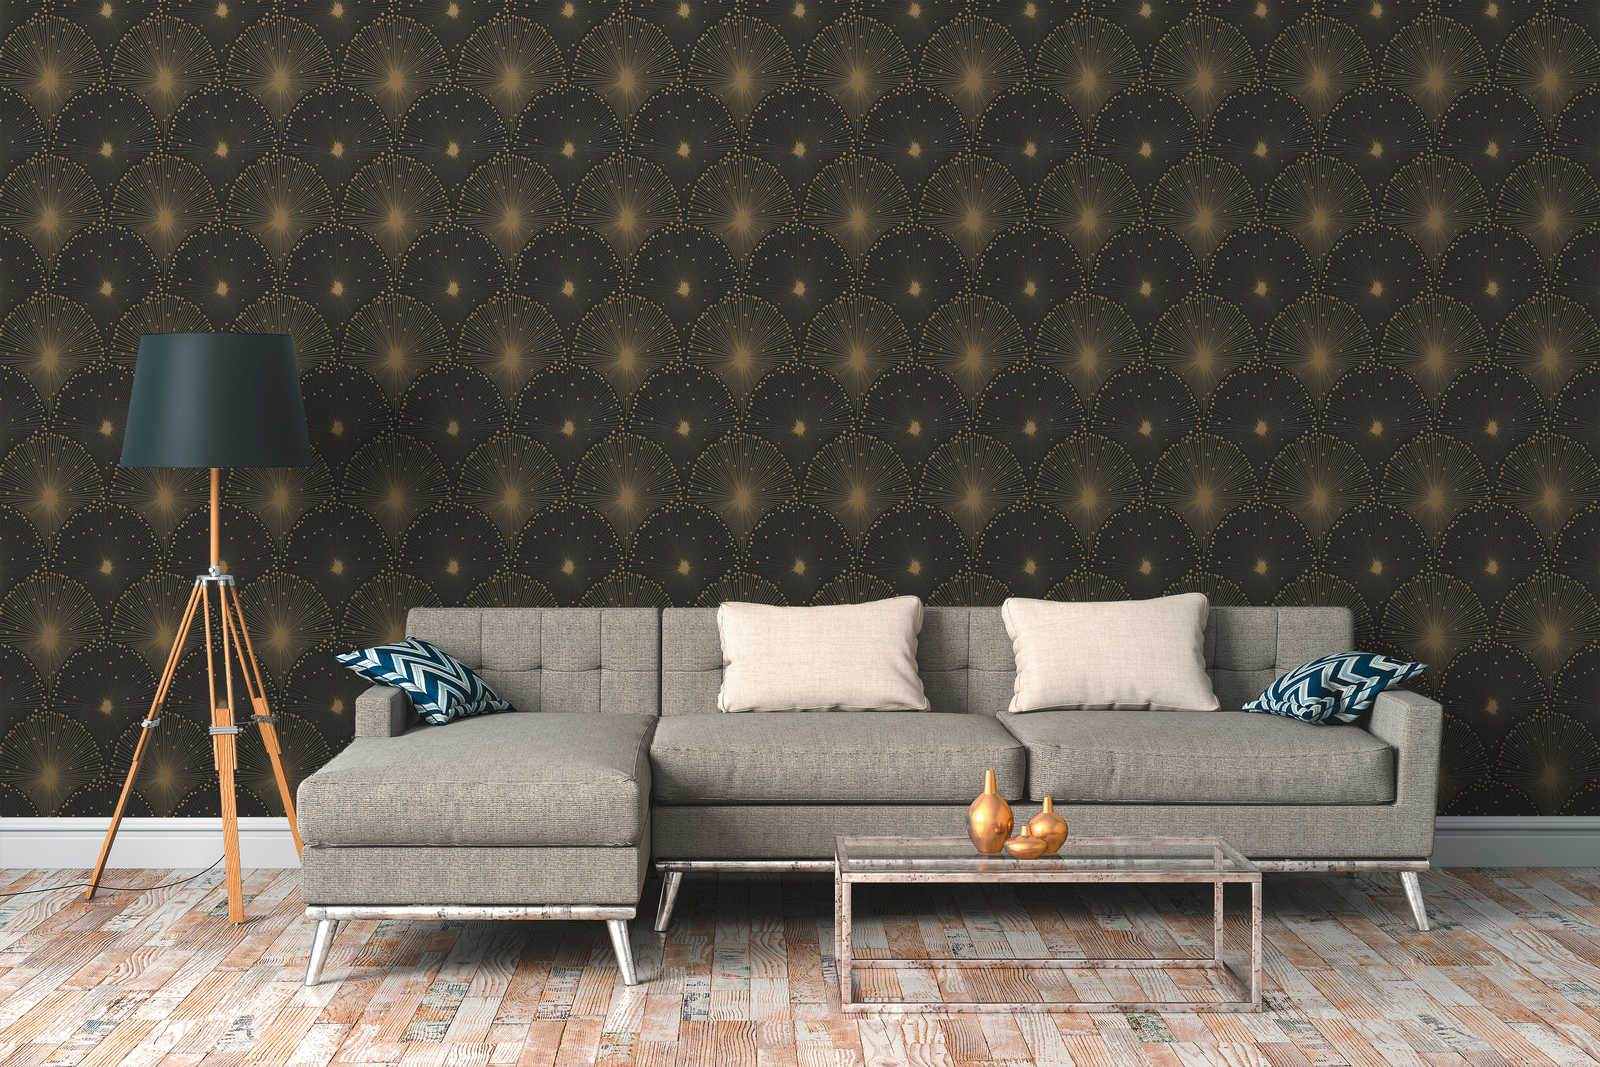             Wallpaper metallic effect in art deco style - gold, black
        